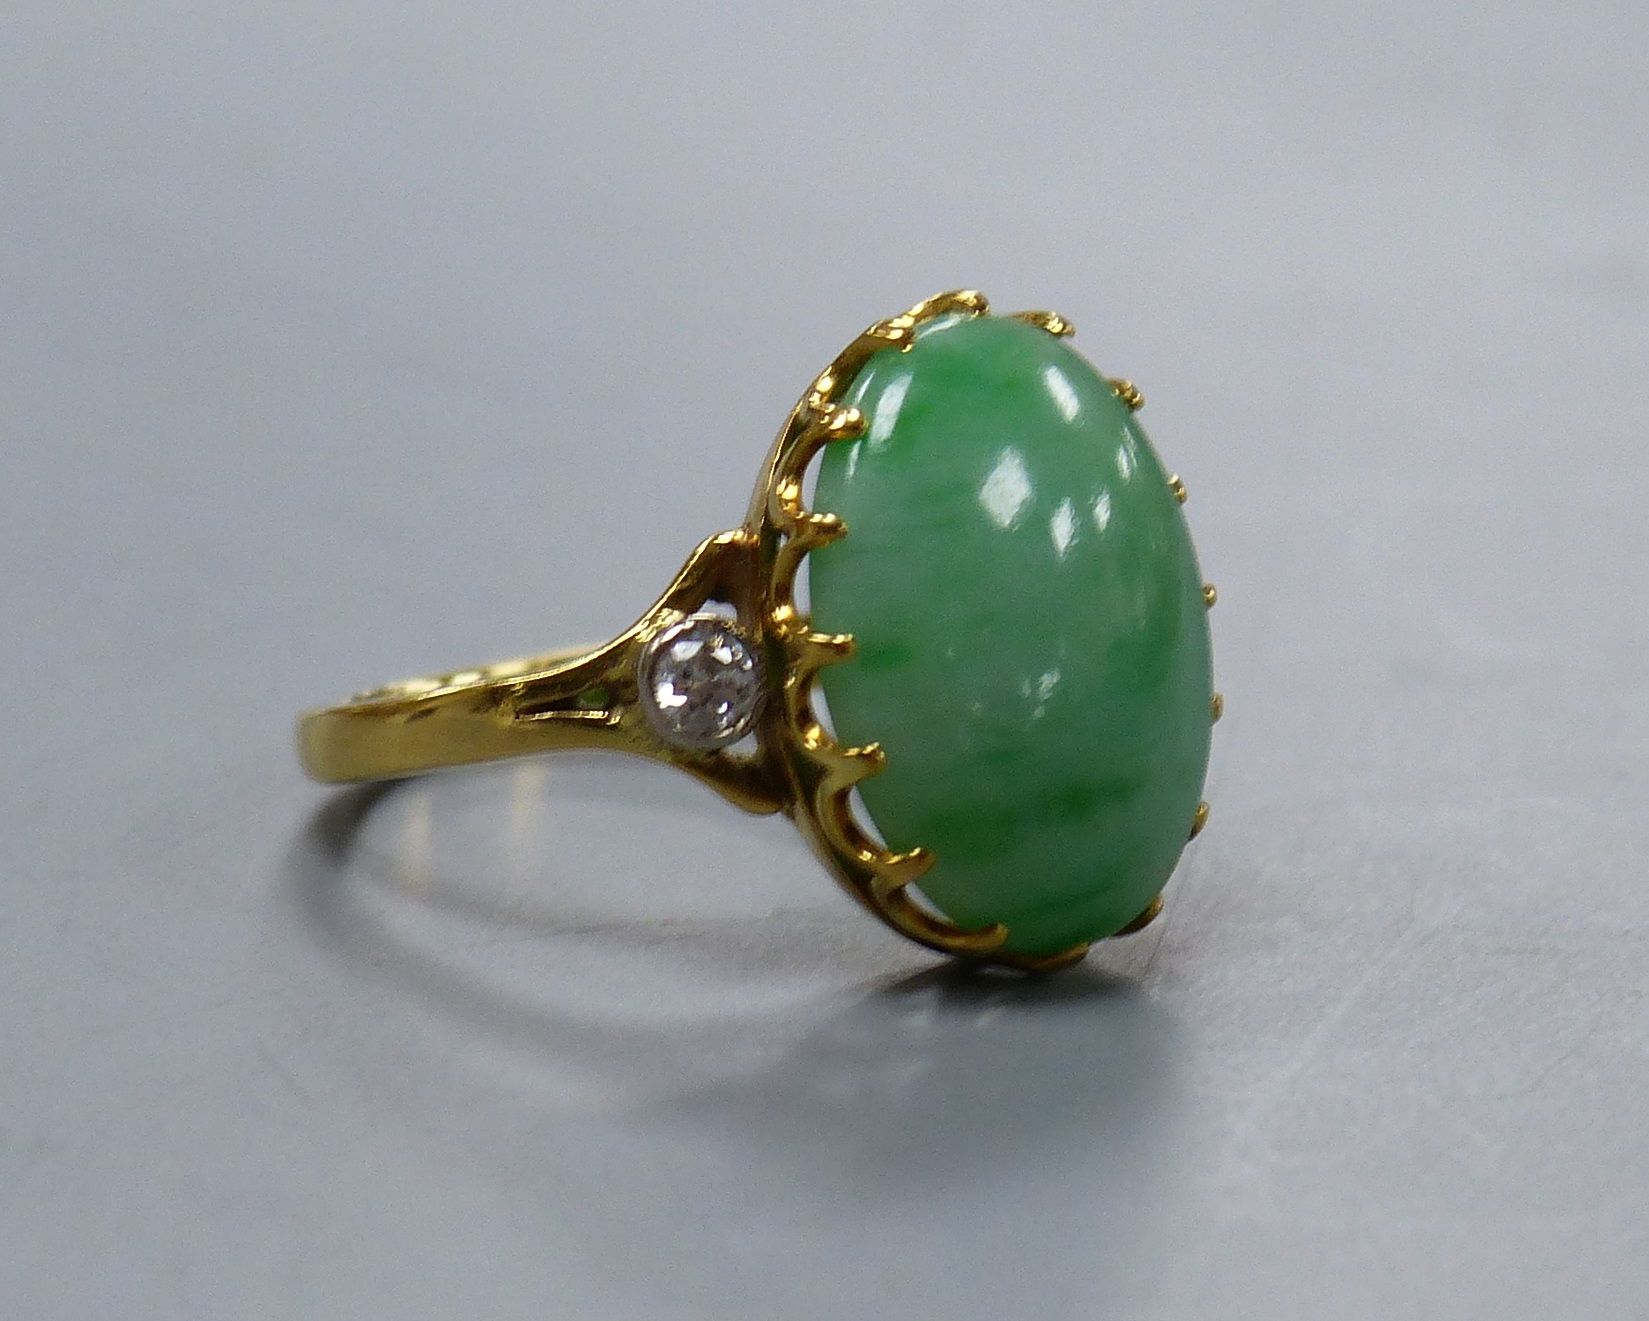 A jade and diamond dress ring, 18ct yellow gold setting